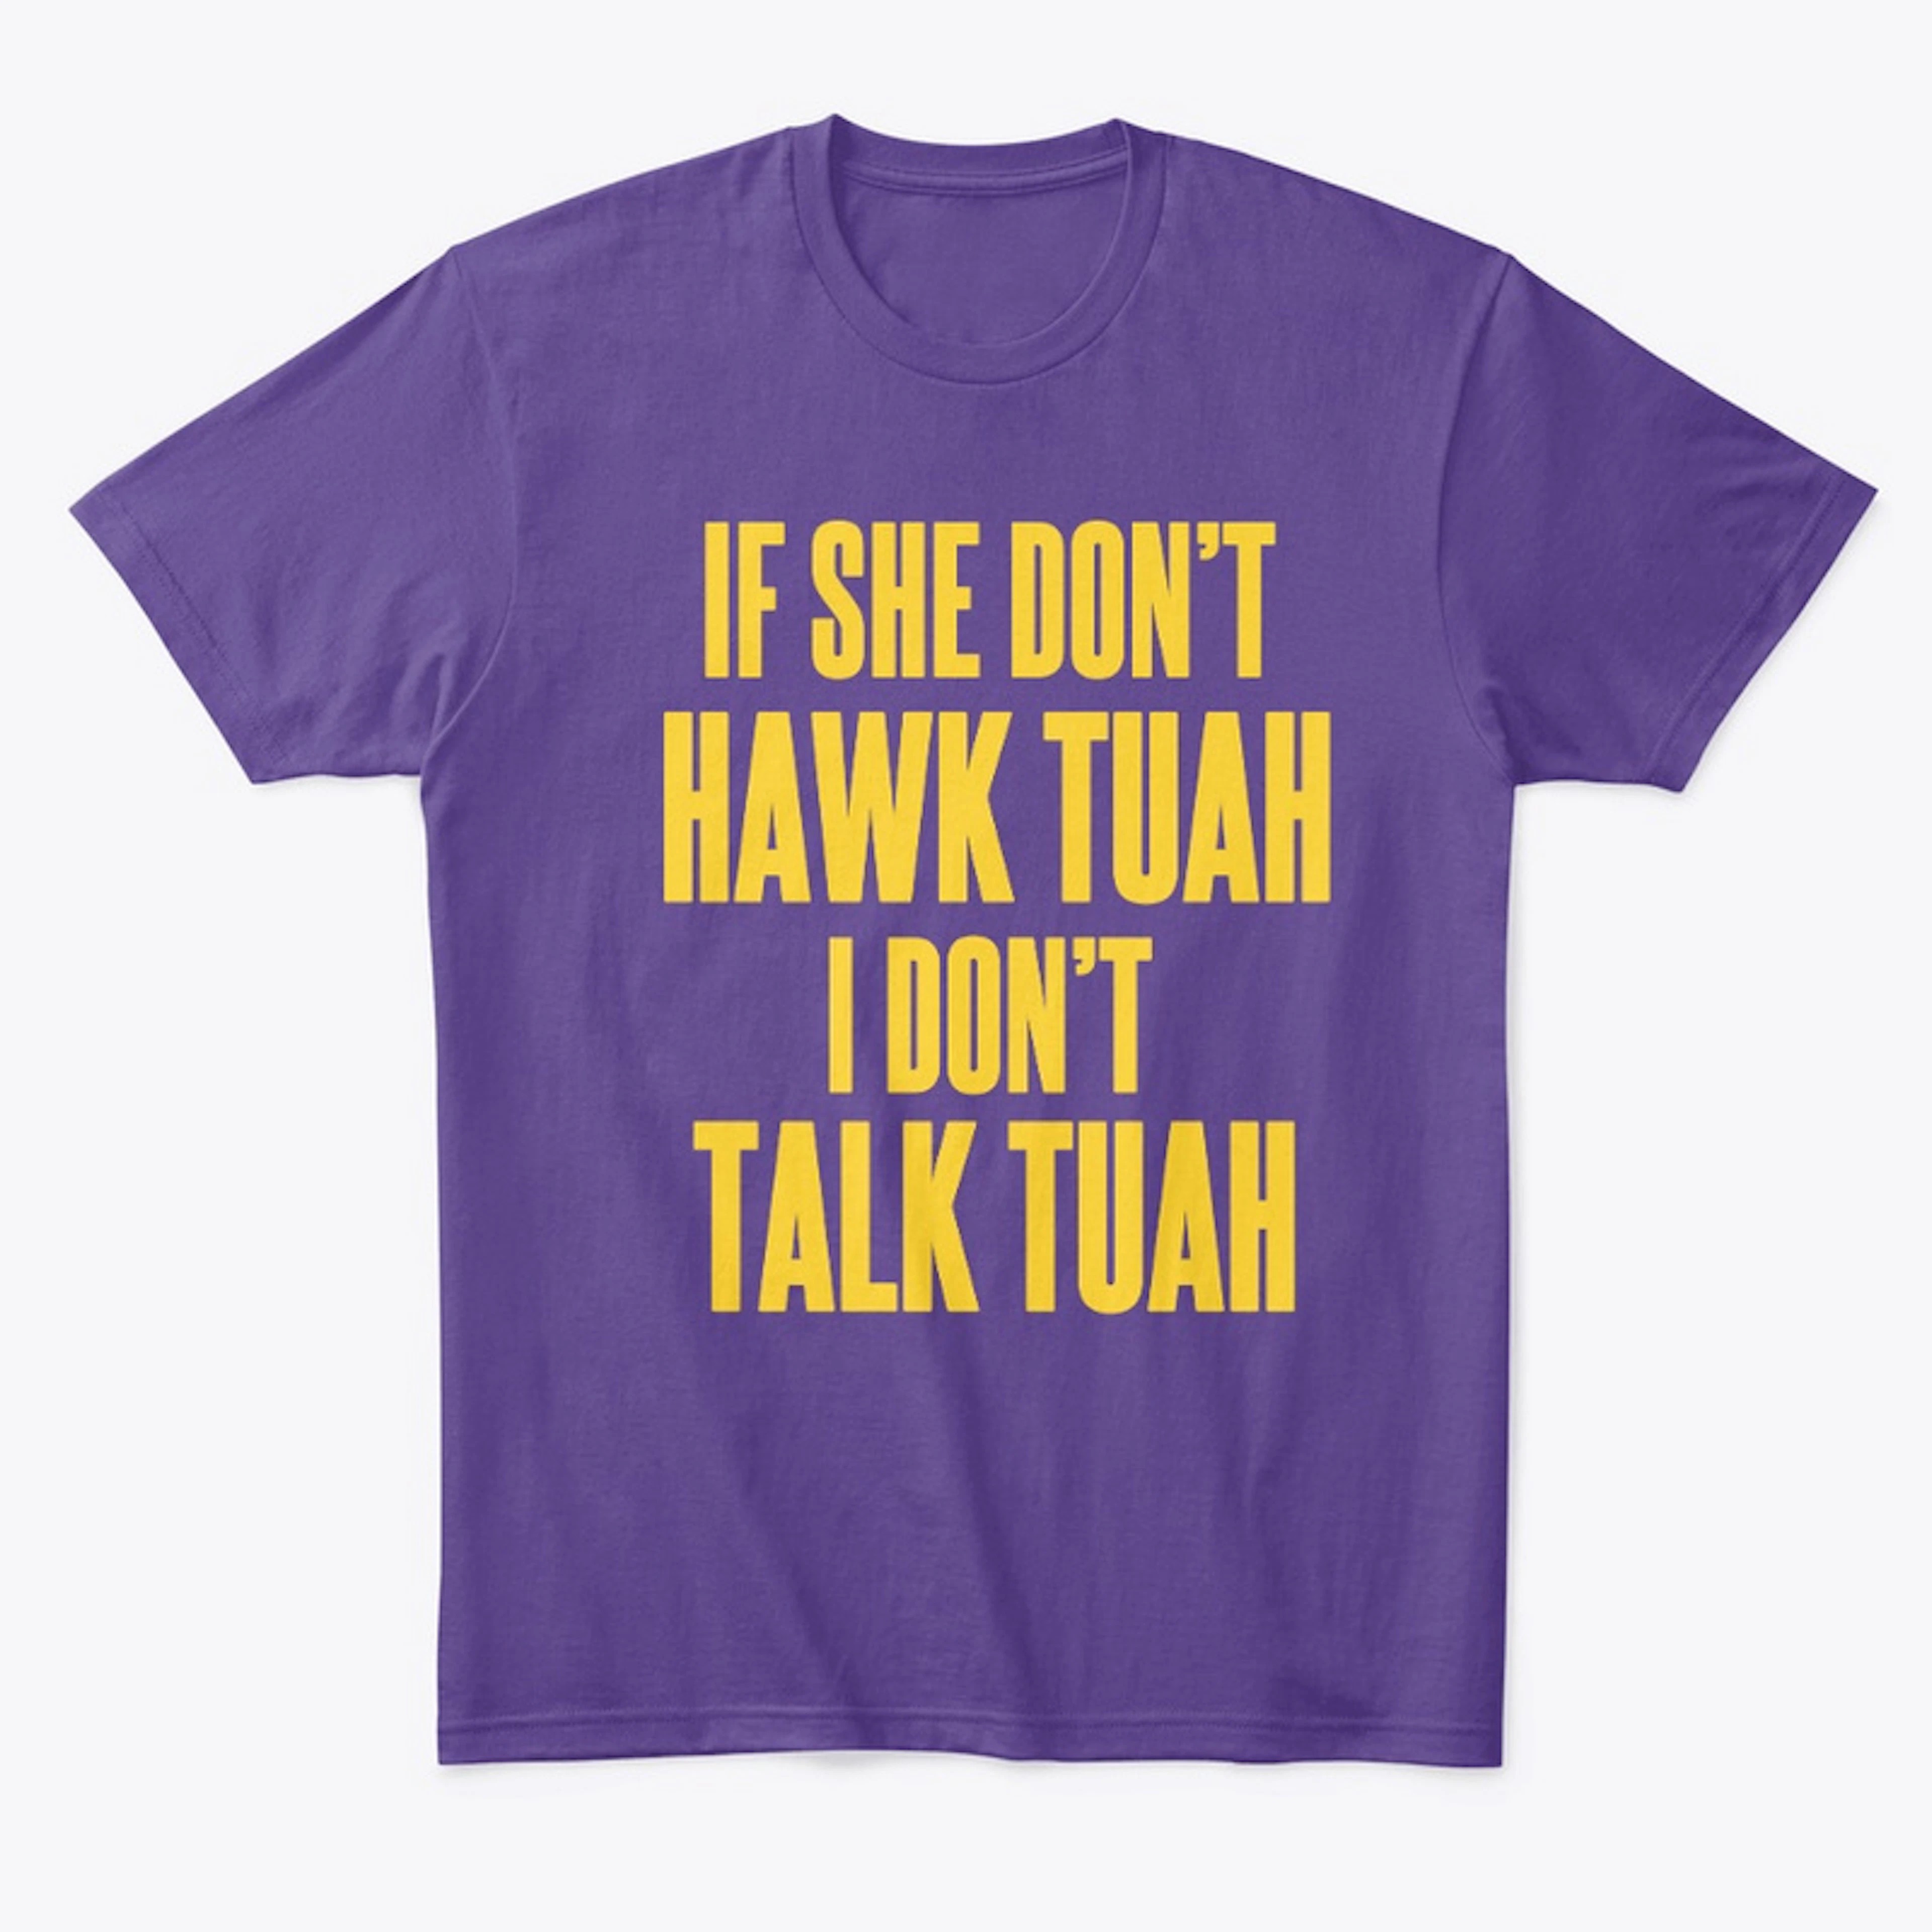 Hawk Tuah Tee, Purple and Gold